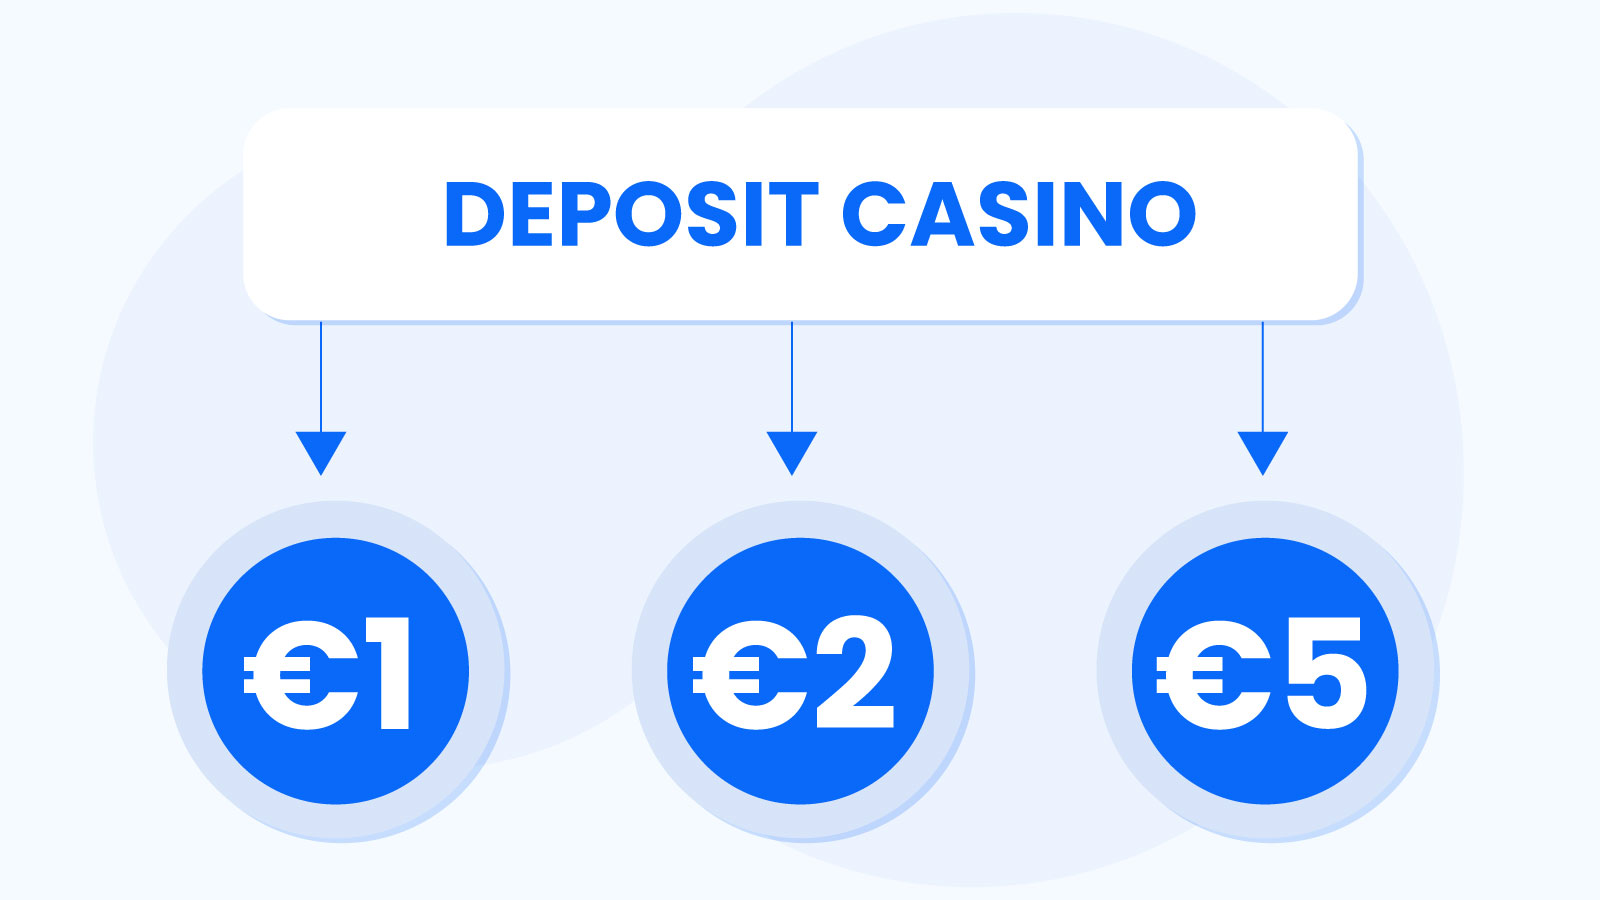 Other Minimum Deposit Casino Limits